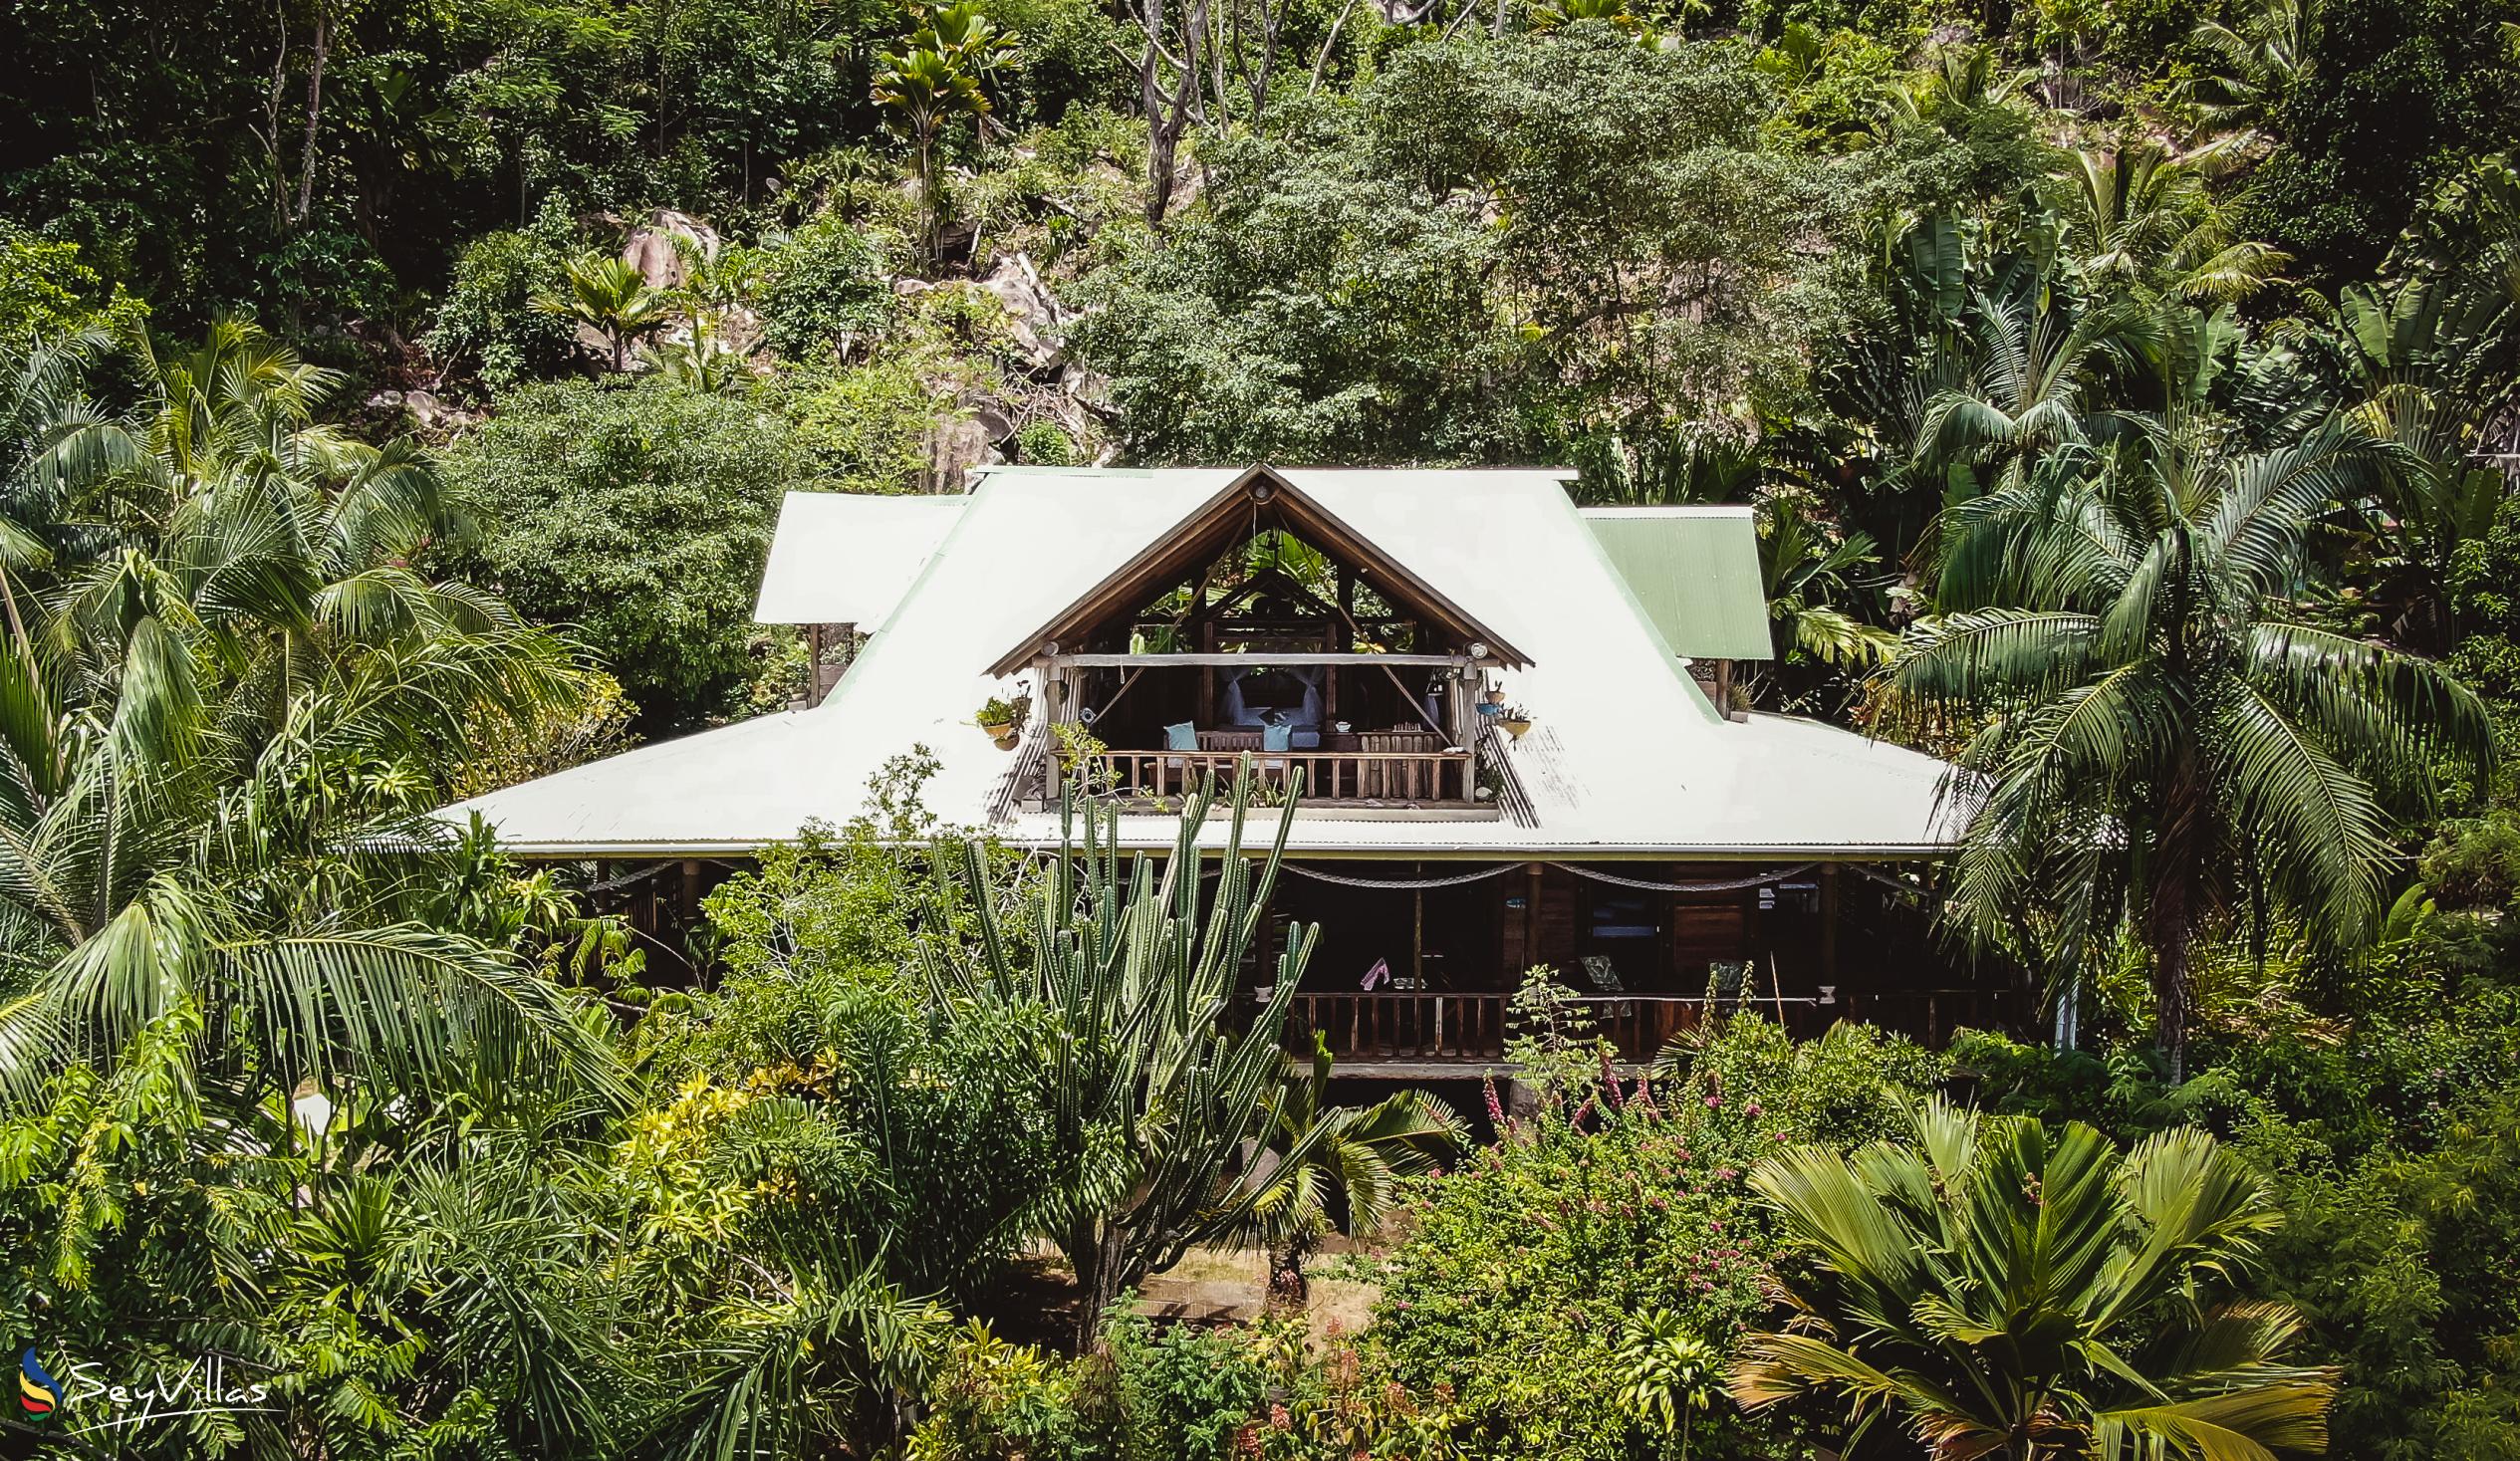 Foto 6: Secret Villa - Aussenbereich - La Digue (Seychellen)